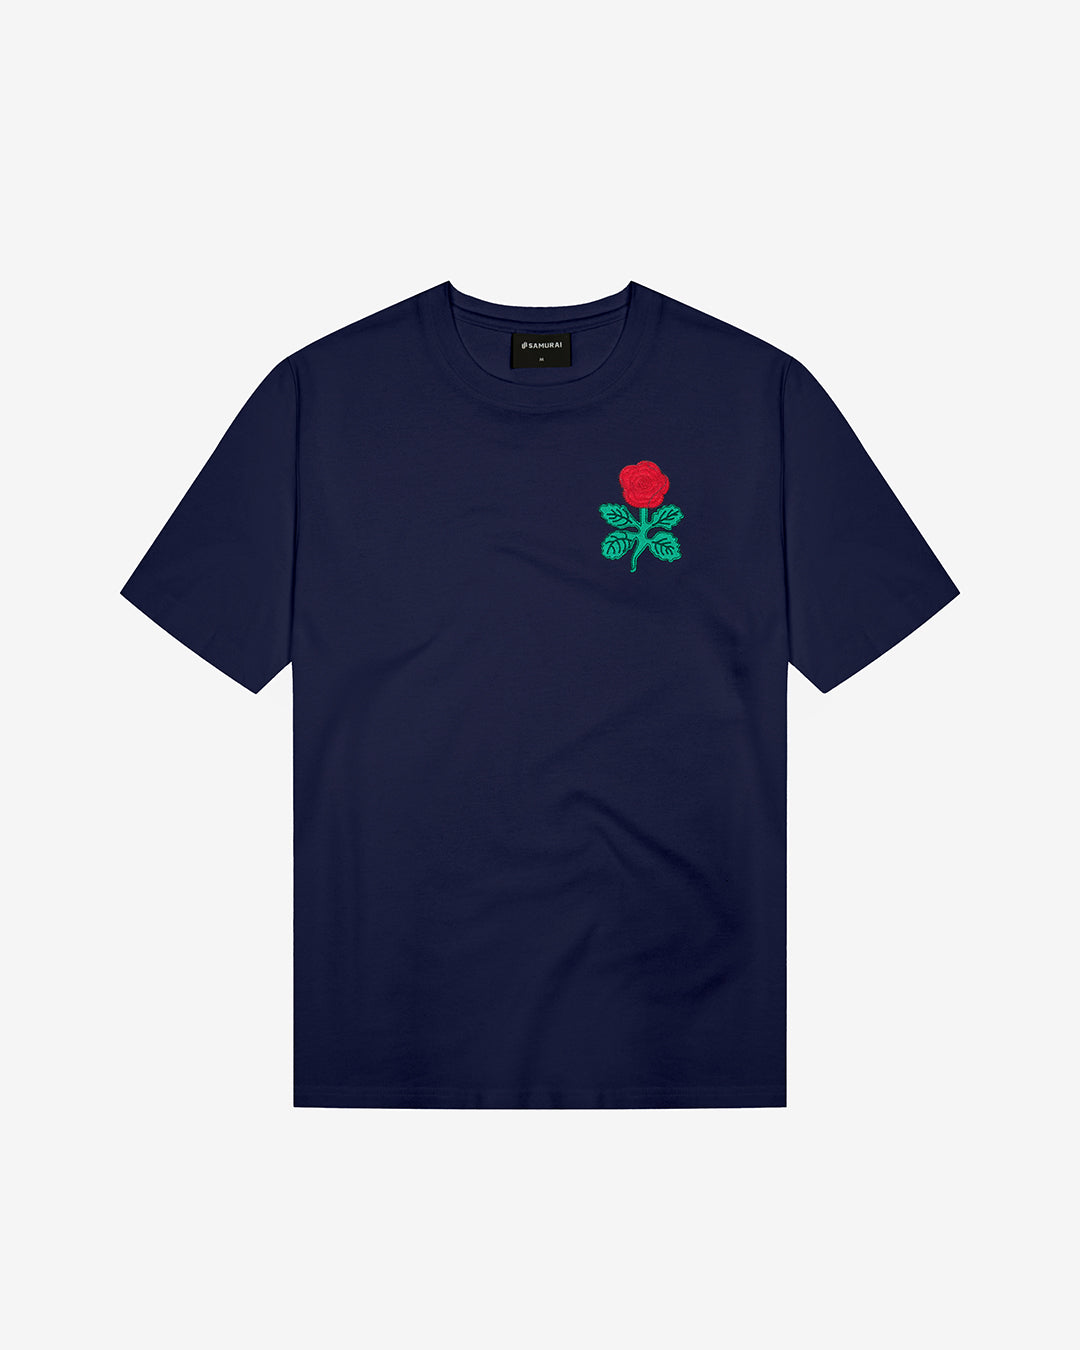 VC: GB-ENG - Women's Vintage Navy T-Shirt - England